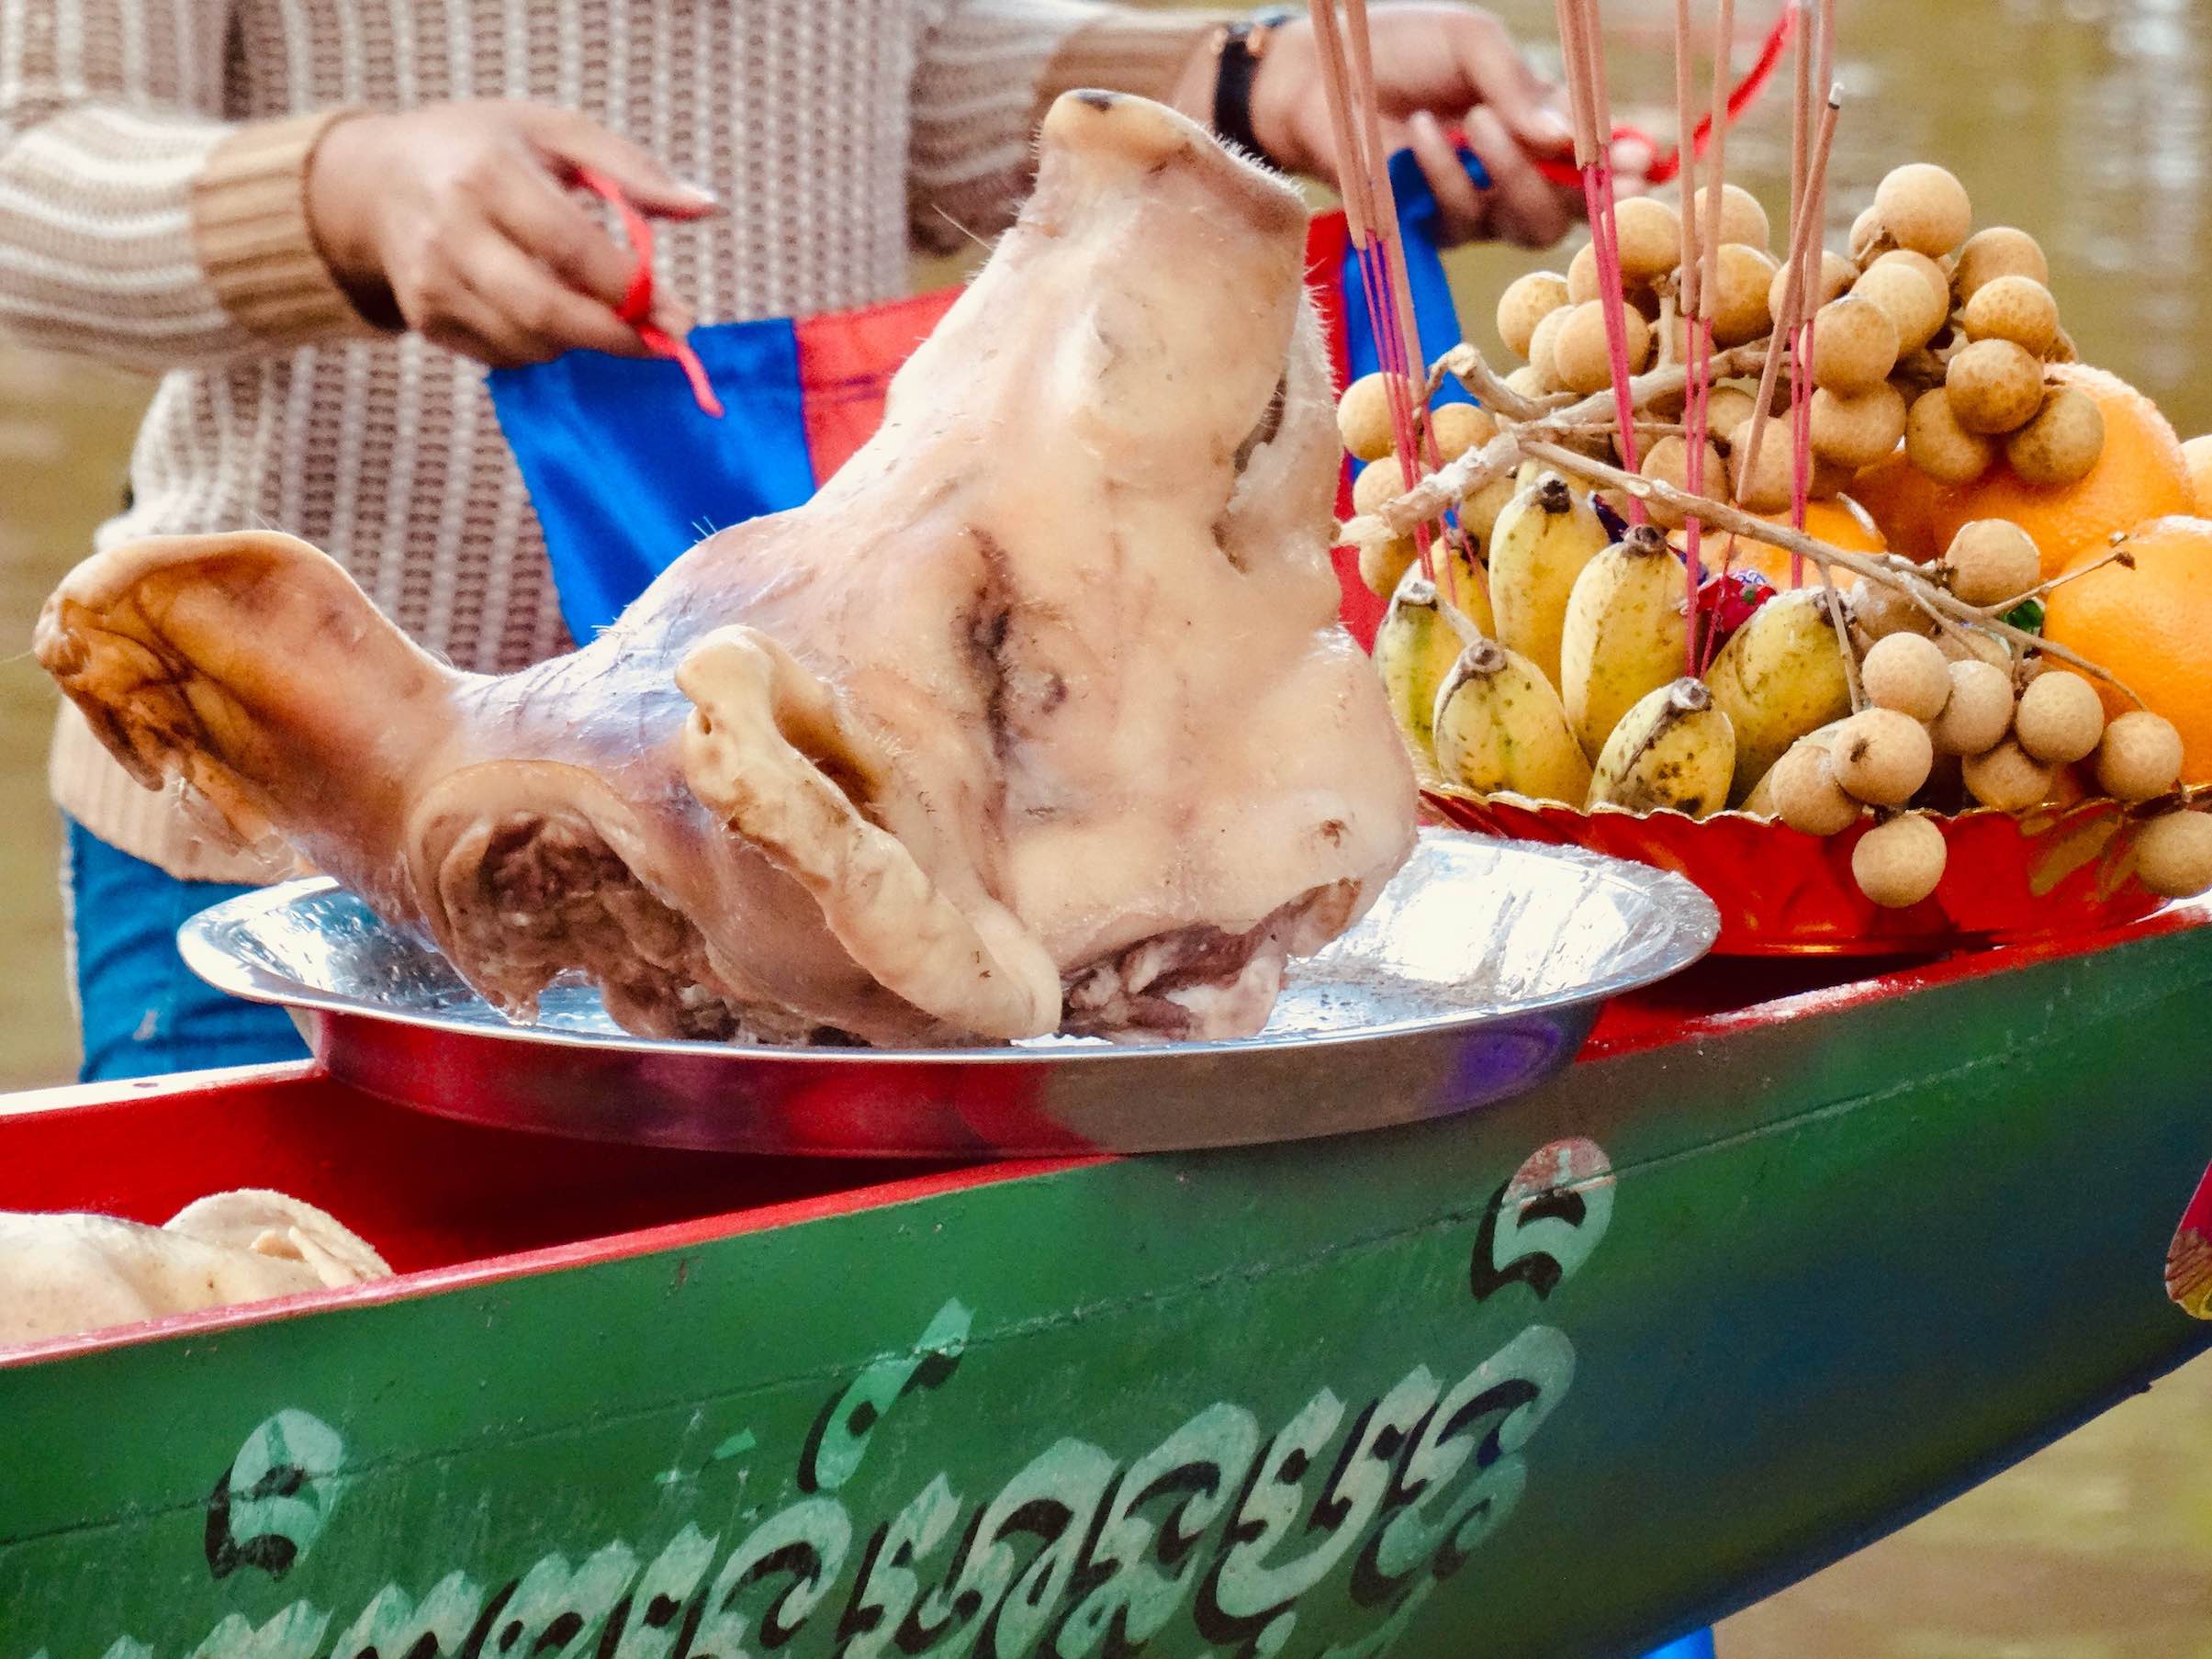 Severed pig's head Siem Reap Cambodia